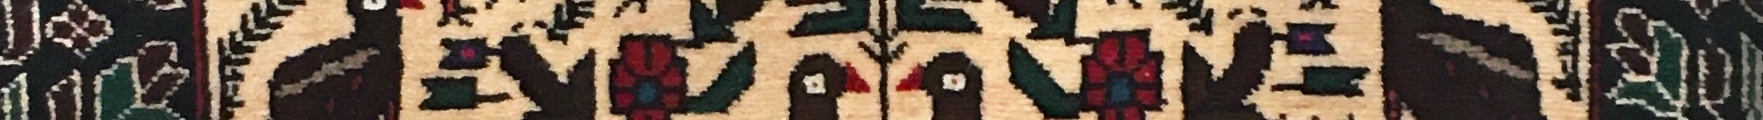 decorative rug detail